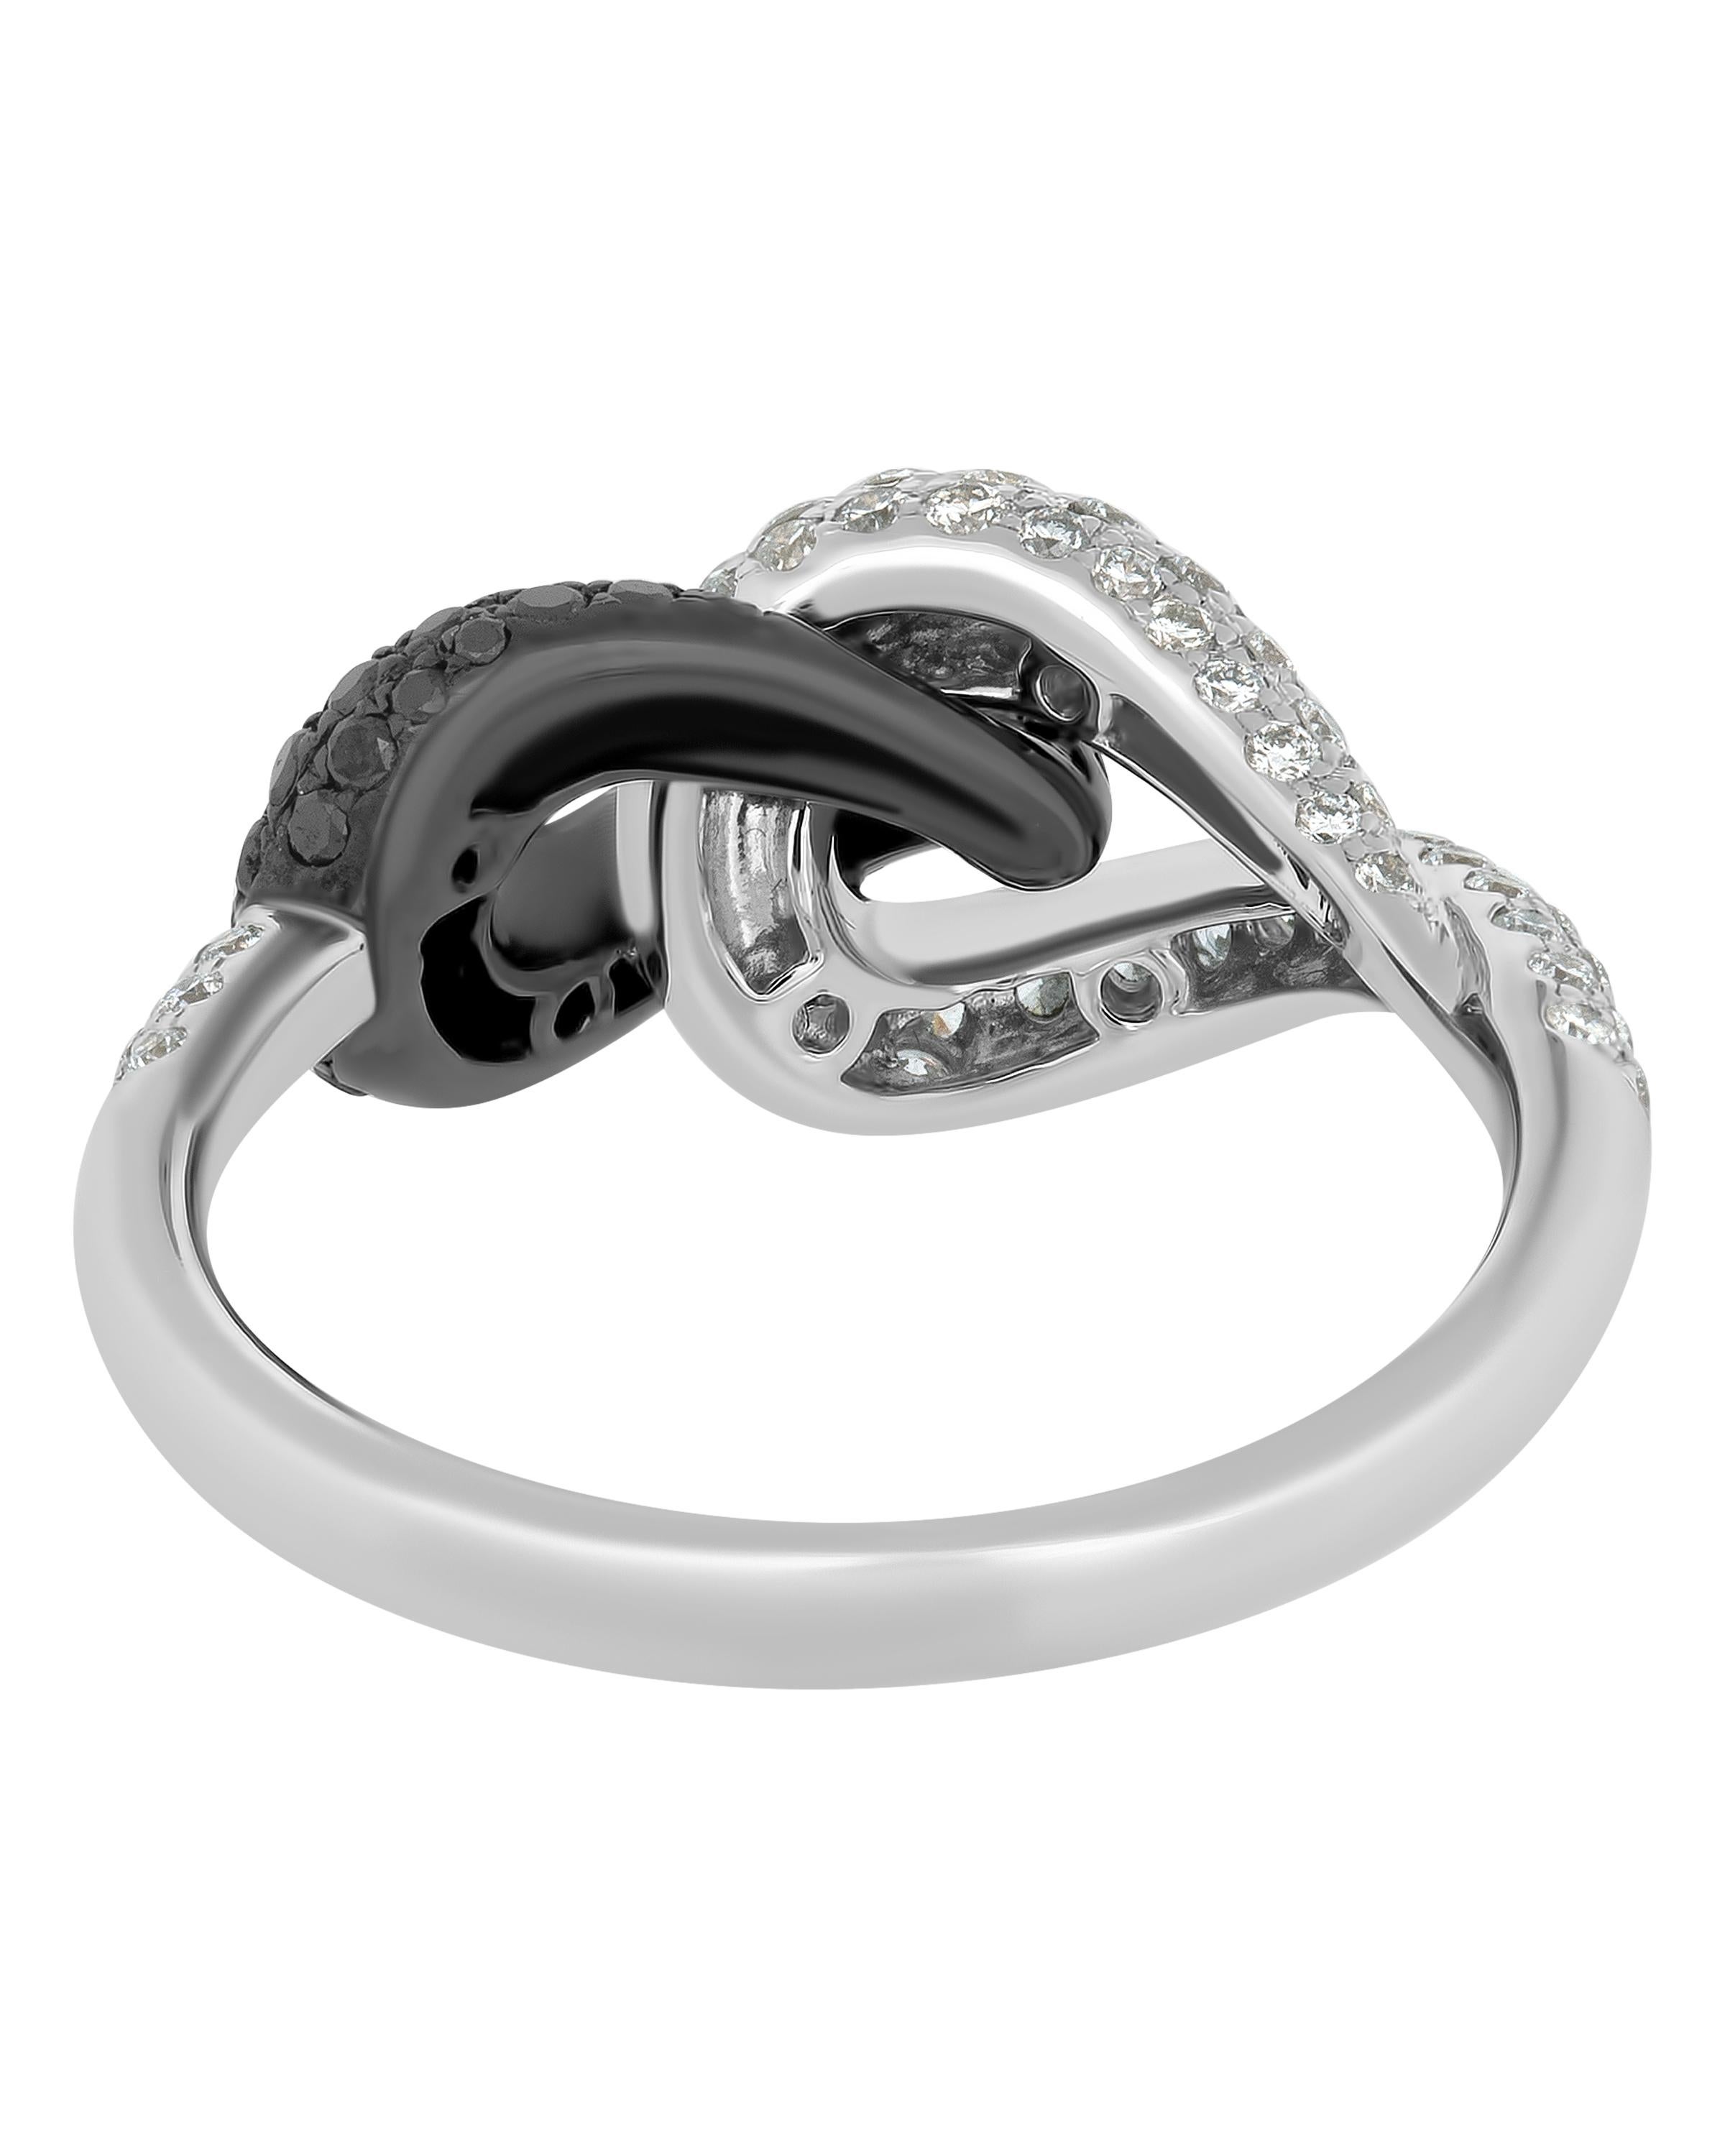 Contemporary Piero Milano 18K White and Black Gold, Black & White Diamond Ring Sz 7 For Sale